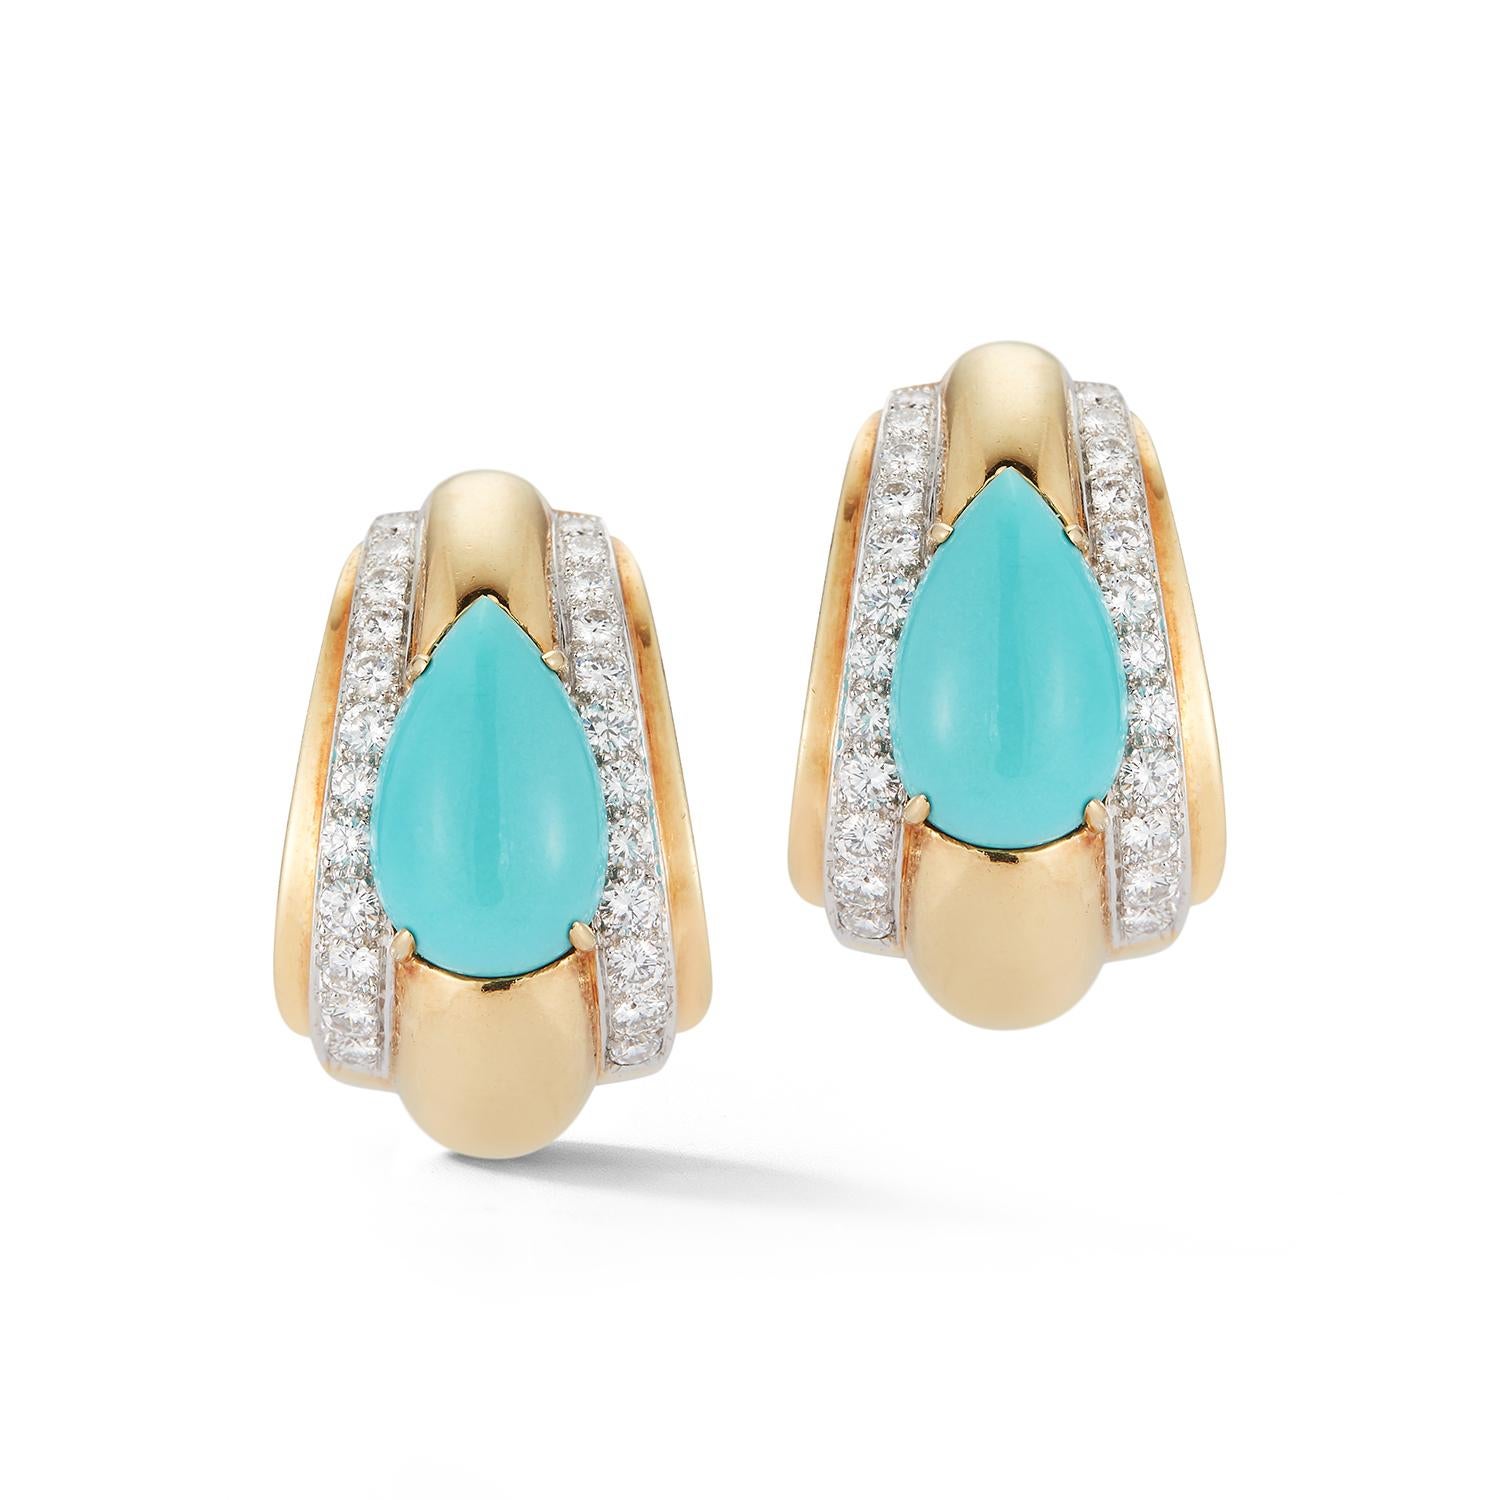 david webb turquoise earrings